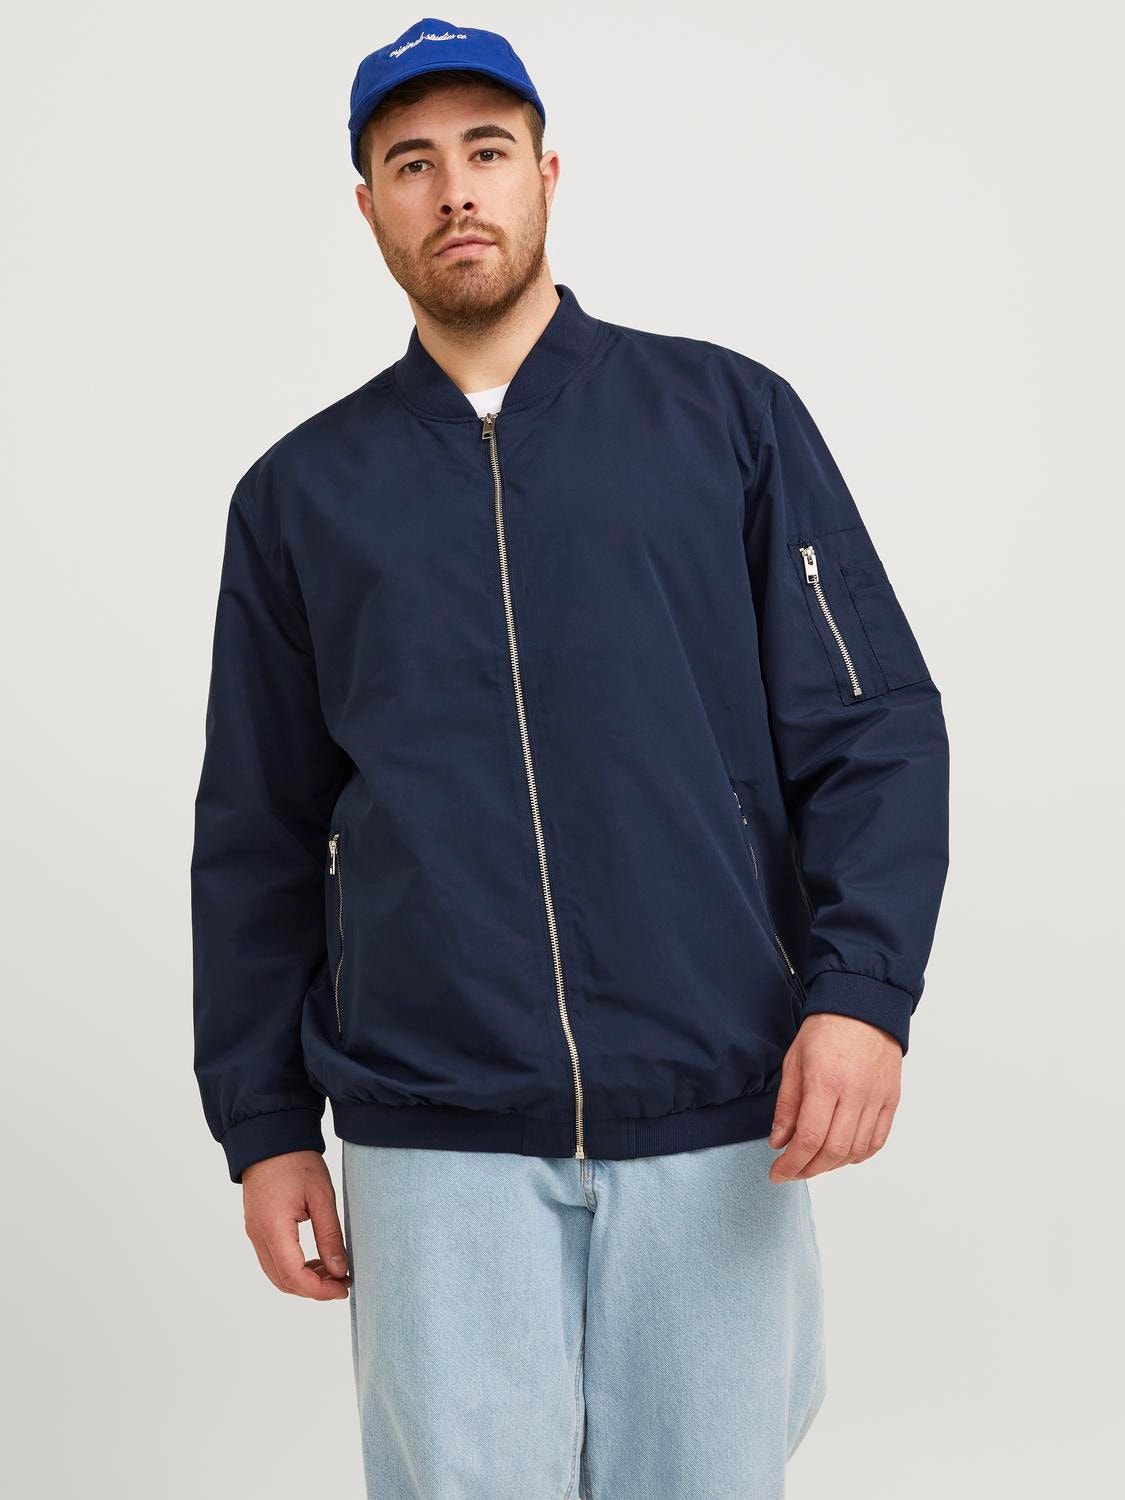 CORE by Jack & Jones workwear zip up ,Men's jacket size Large